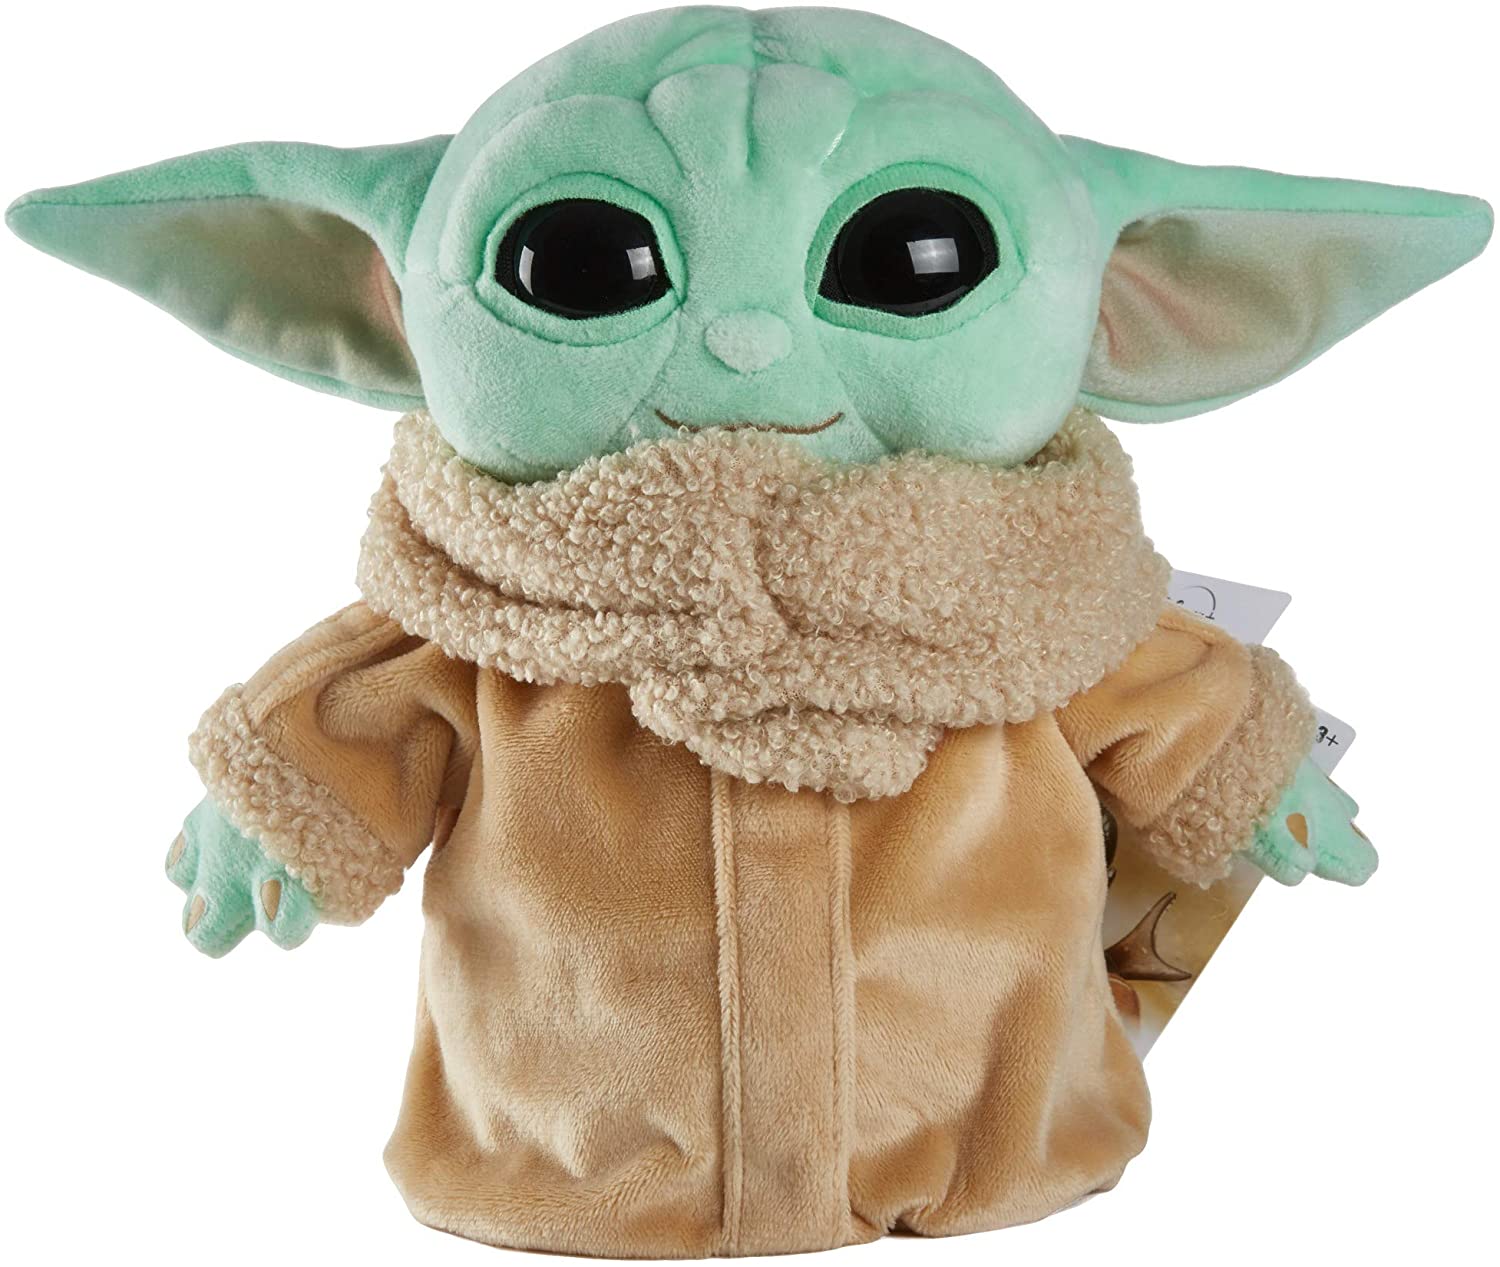 Star Wars The Mandalorian Grogu 8 Inch Plush Toy - Small Yoda Baby Figure